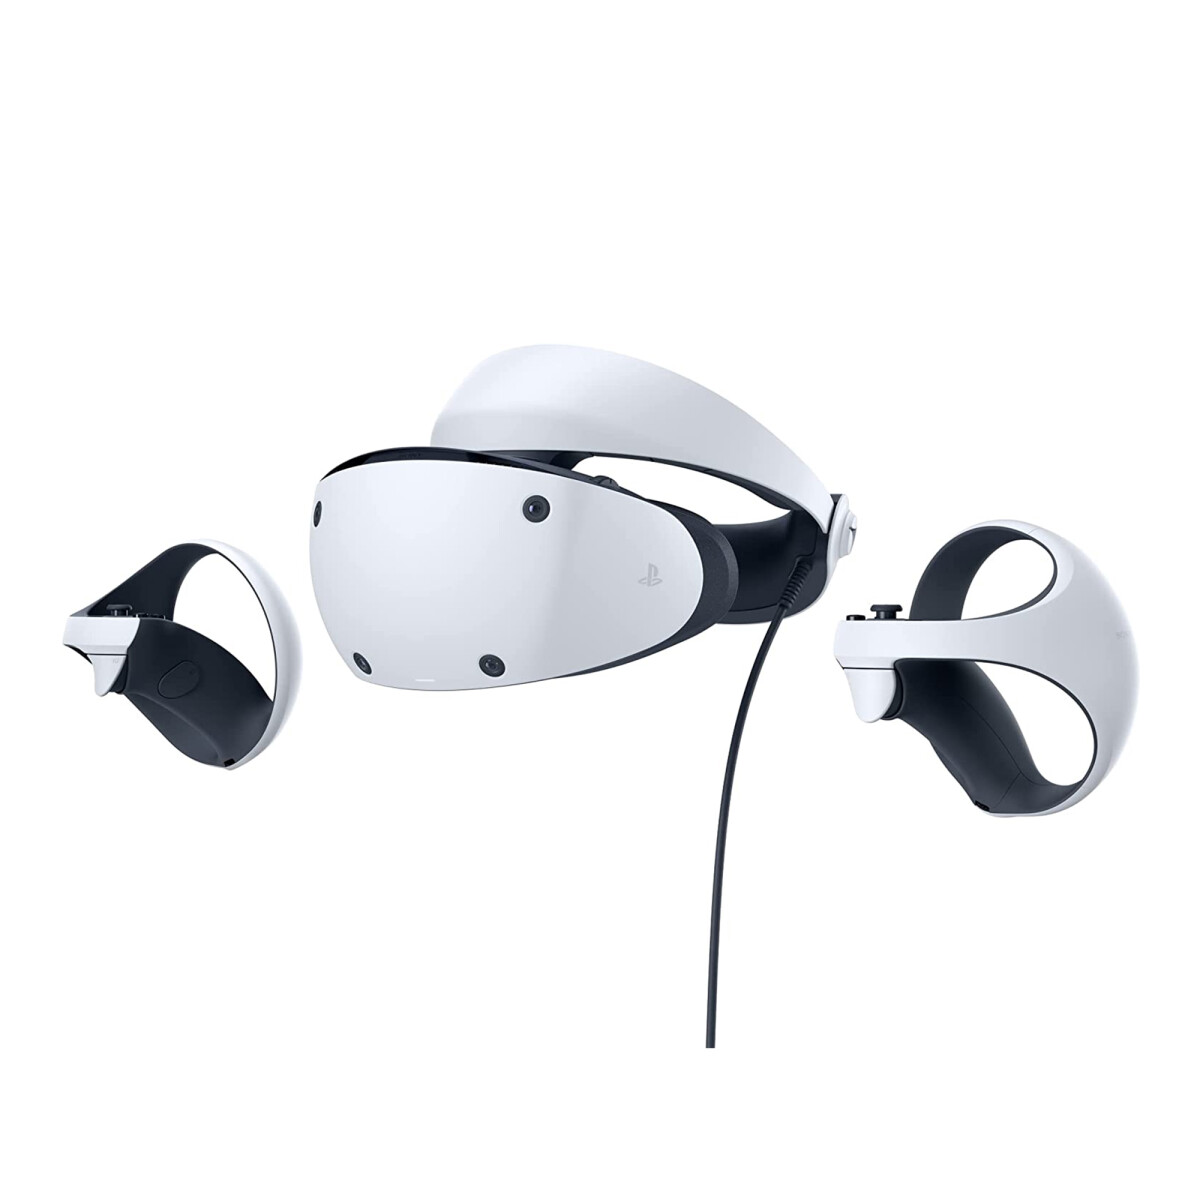 Sony - Lentes de Realidad Virtual VR2 - Oled. 2000 X 2040 por Ojo. 90 Hz, 120 Hz. 110º. 4 Cámaras + - 001 